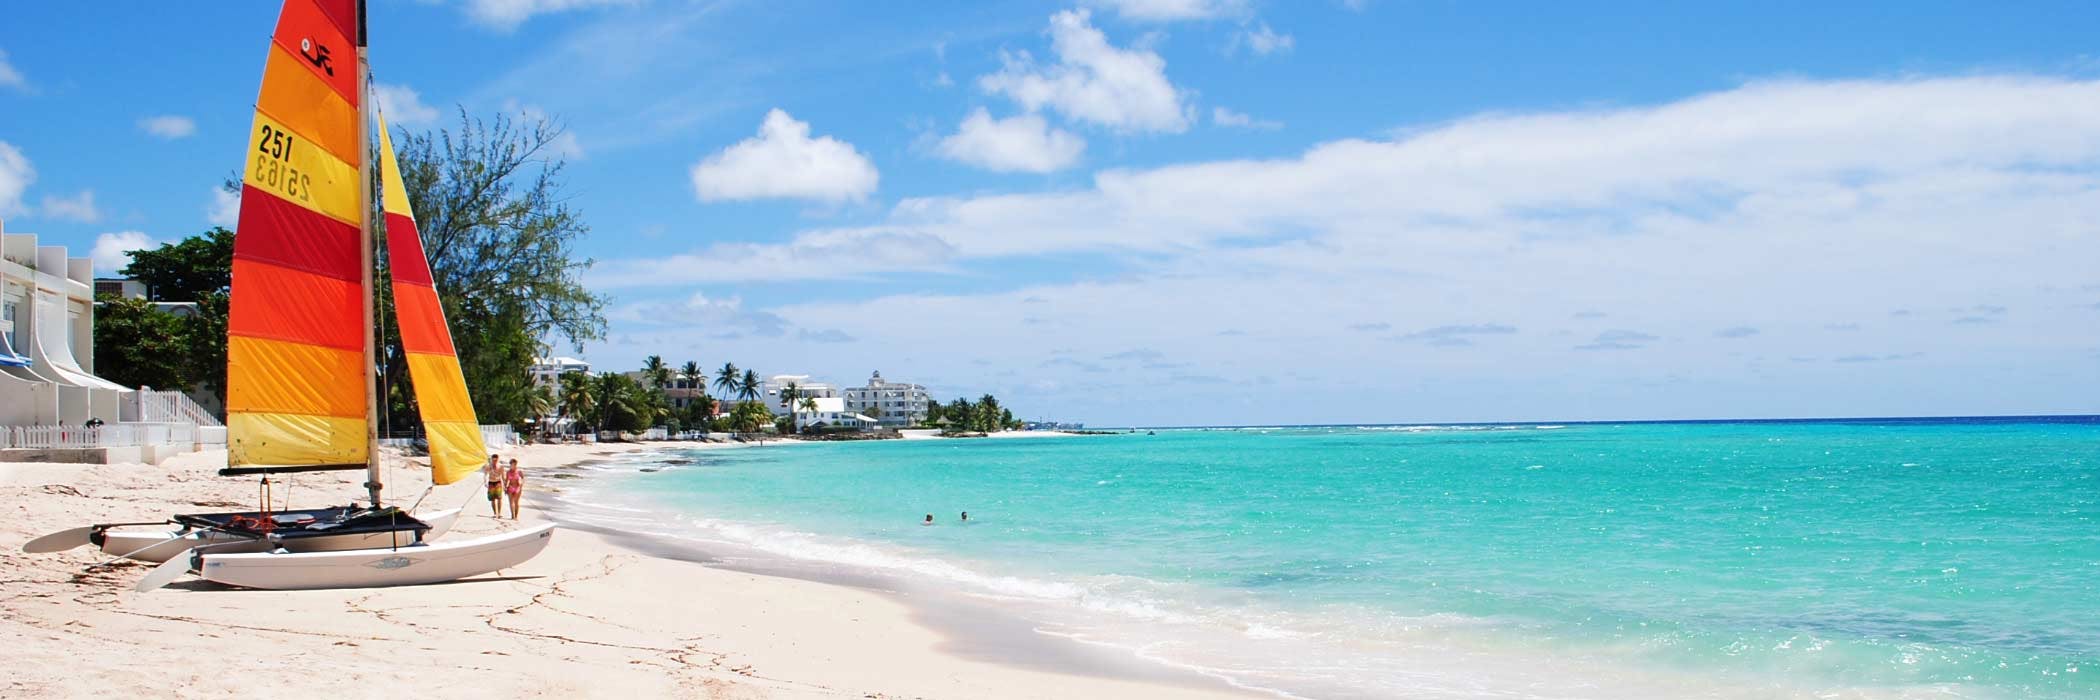 Image of Barbados beach